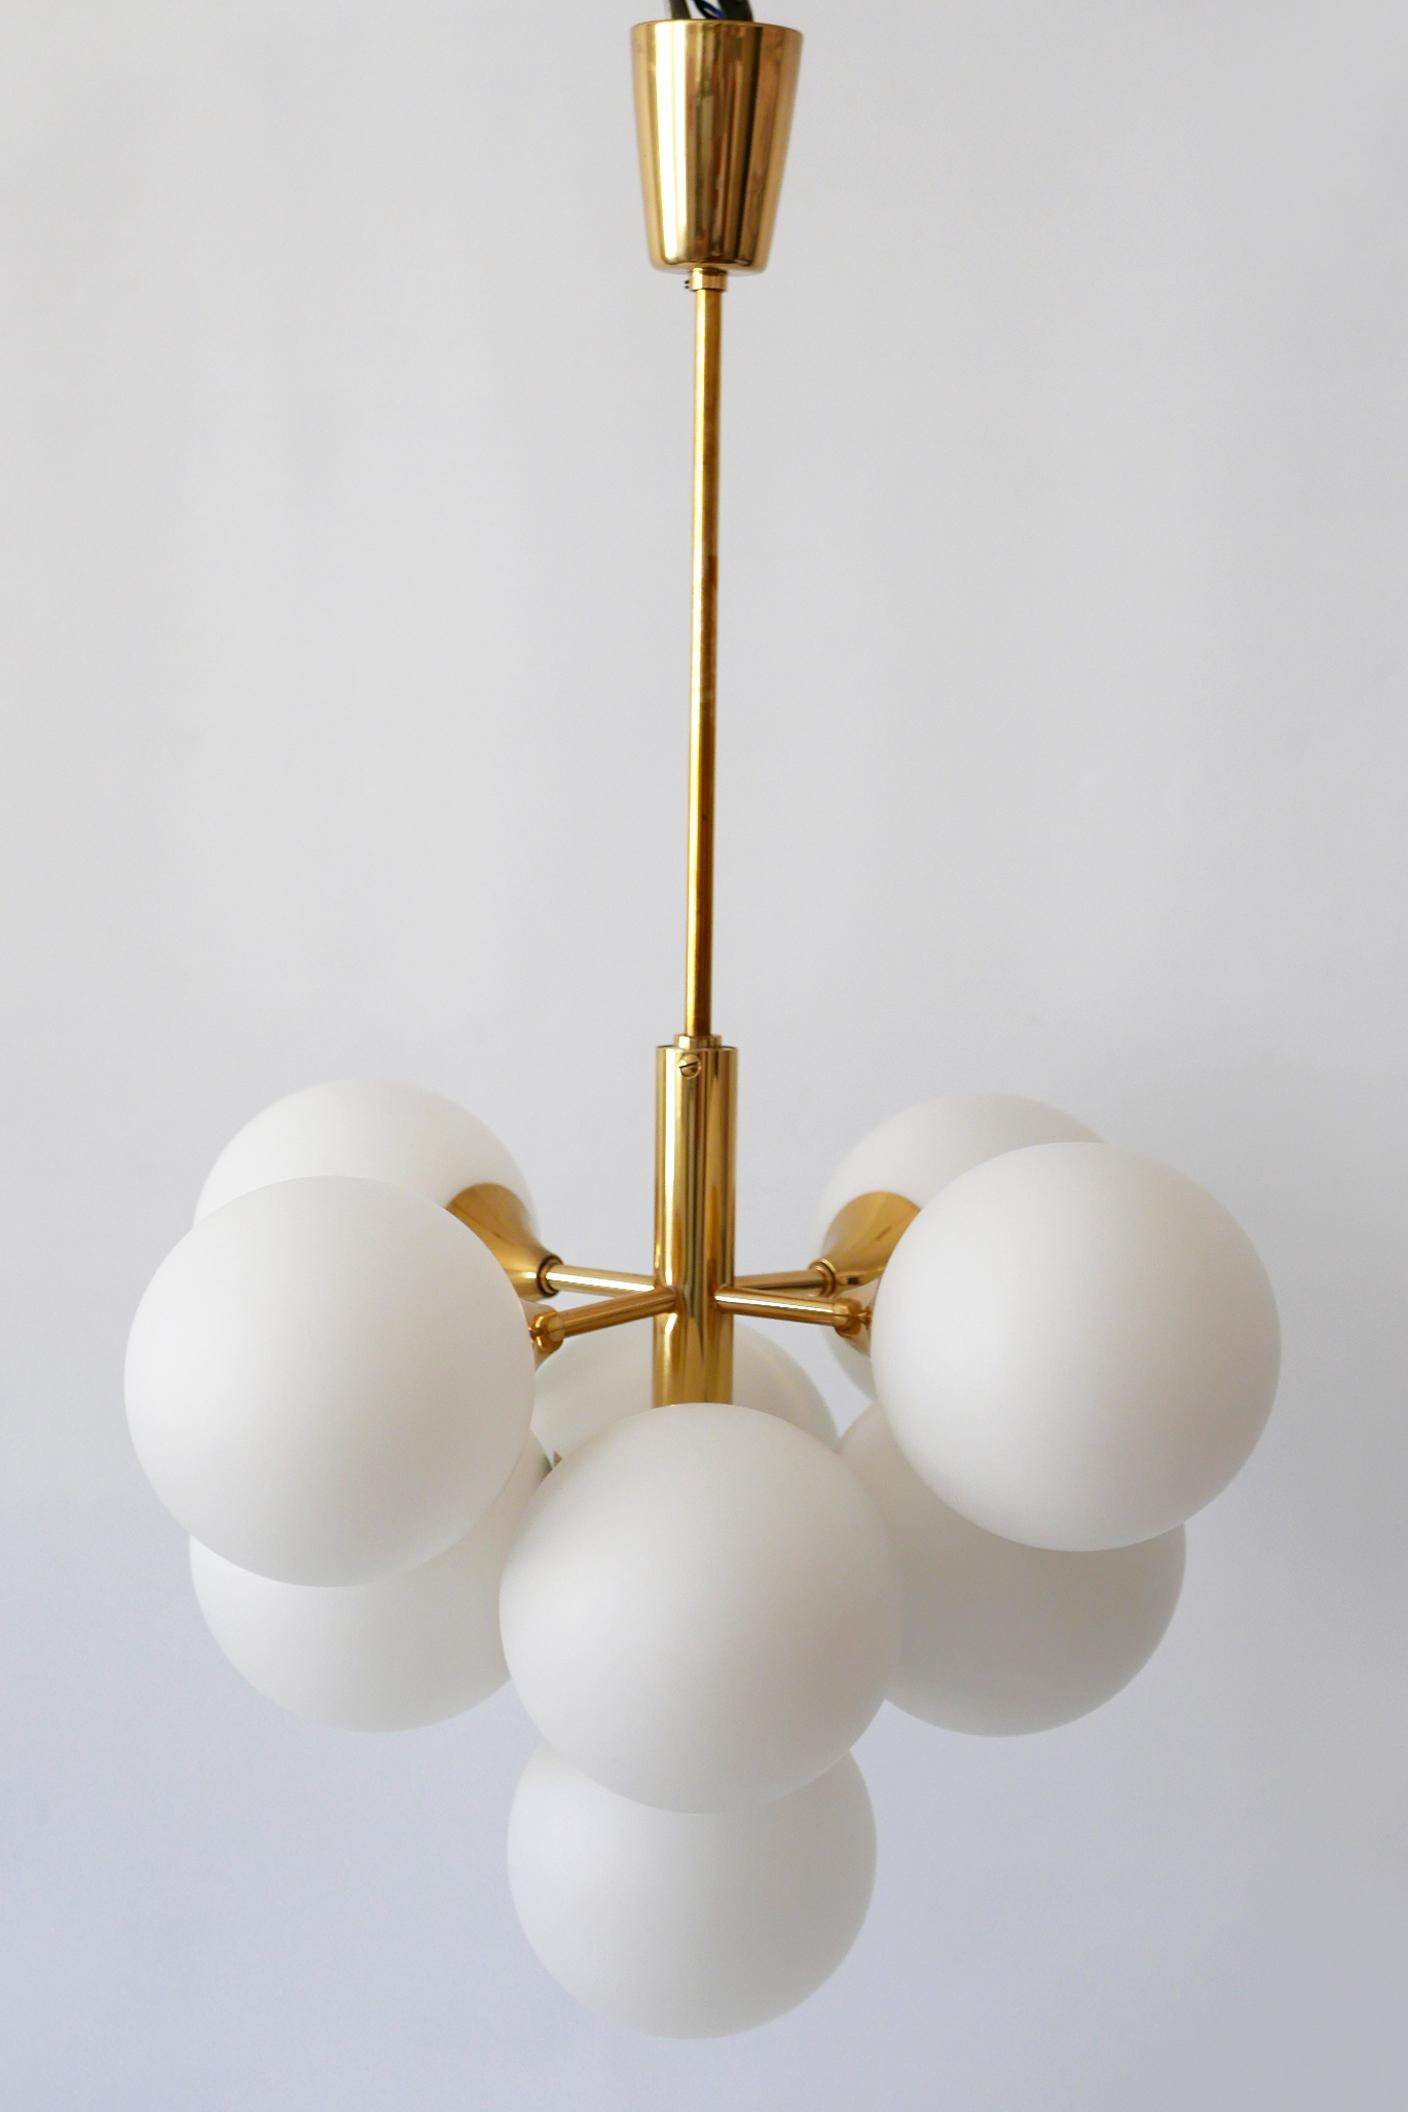 Polished Atomic Multi-Globe Chandelier or Pendant Lamp by Kaiser Leuchten, Germany, 1970s For Sale